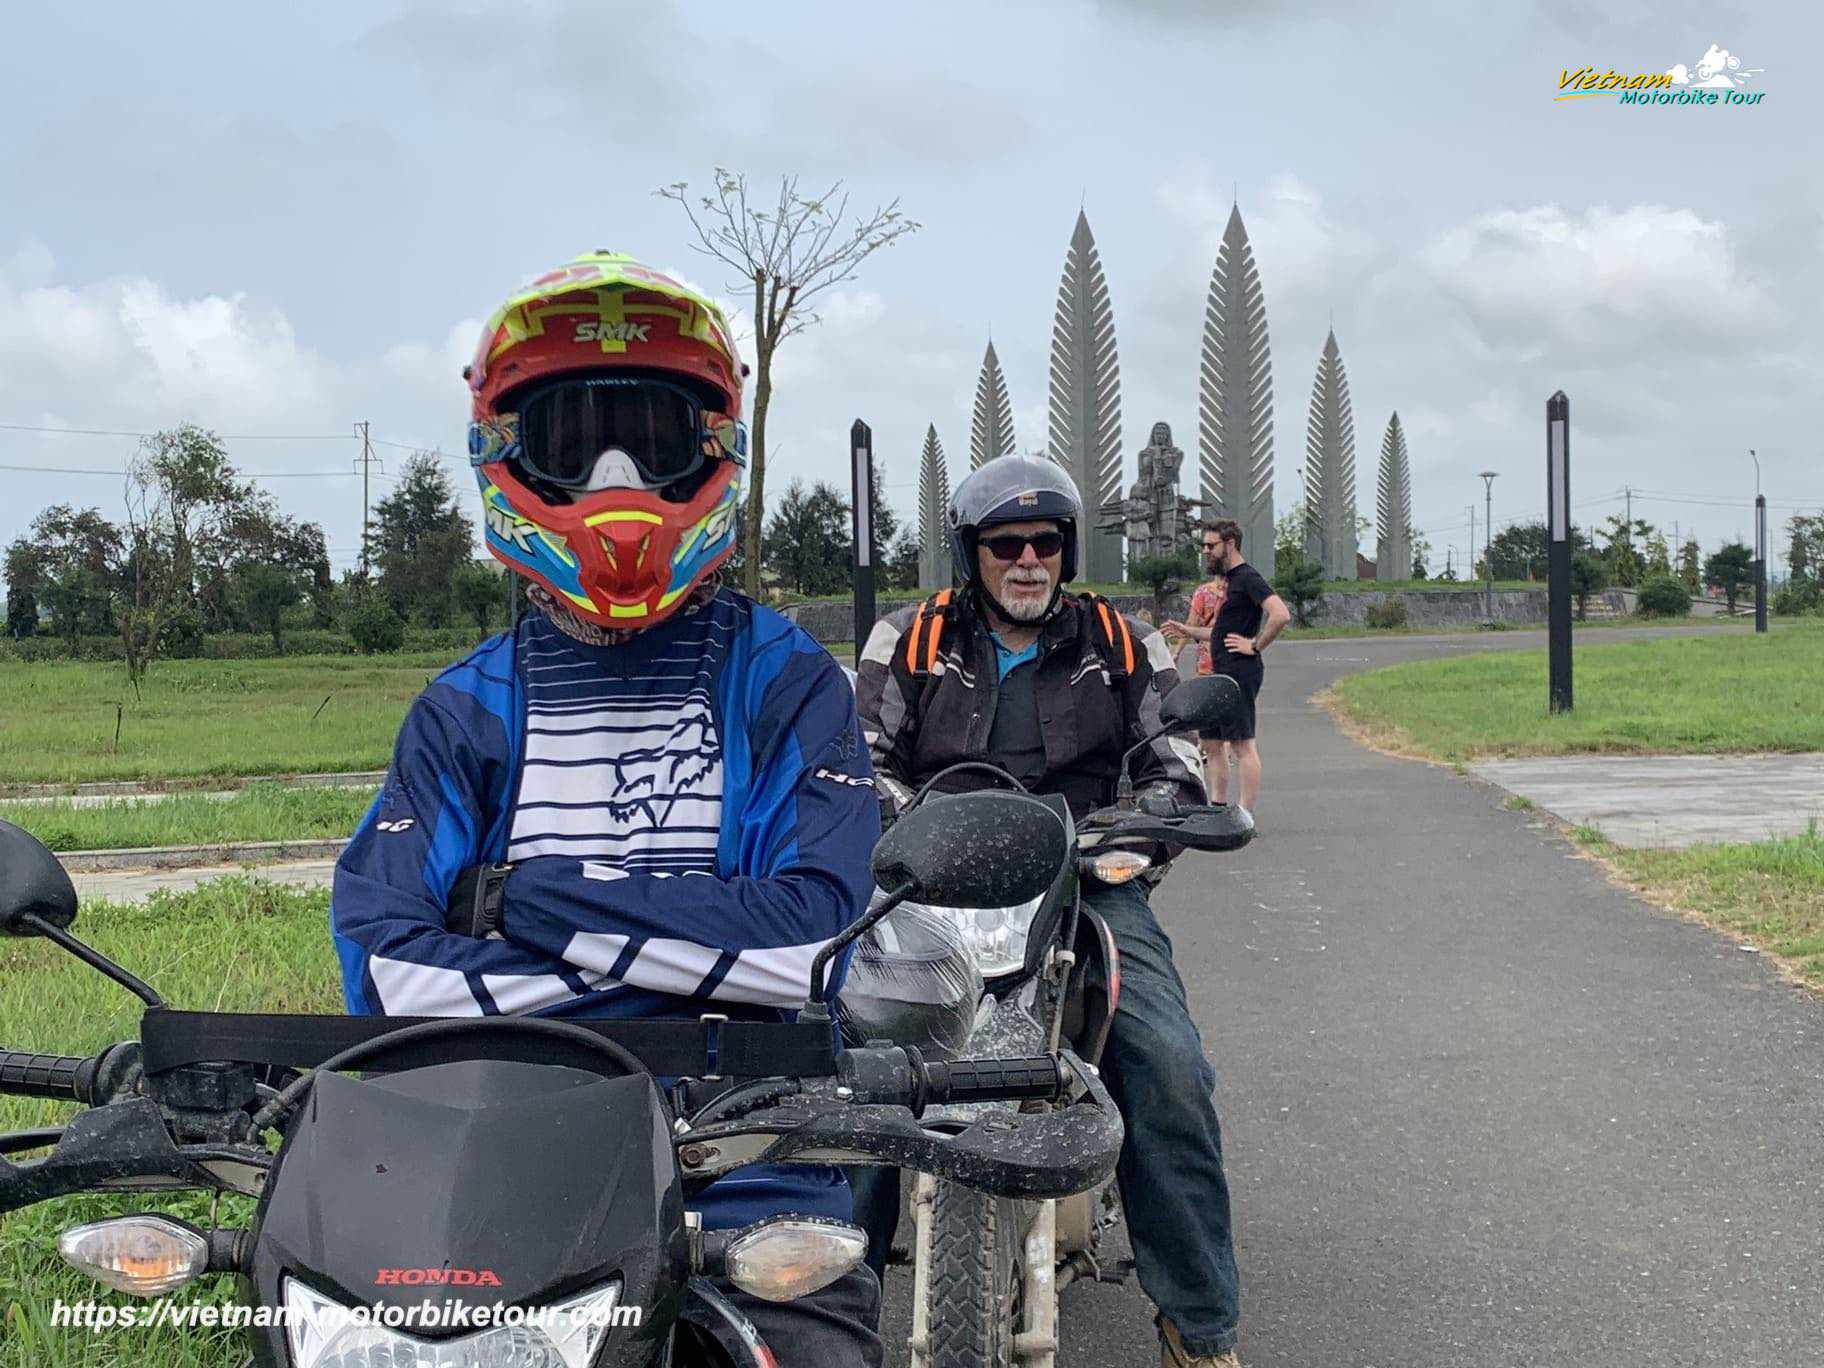 Phong Nha motorbike tour to Khe Sanh